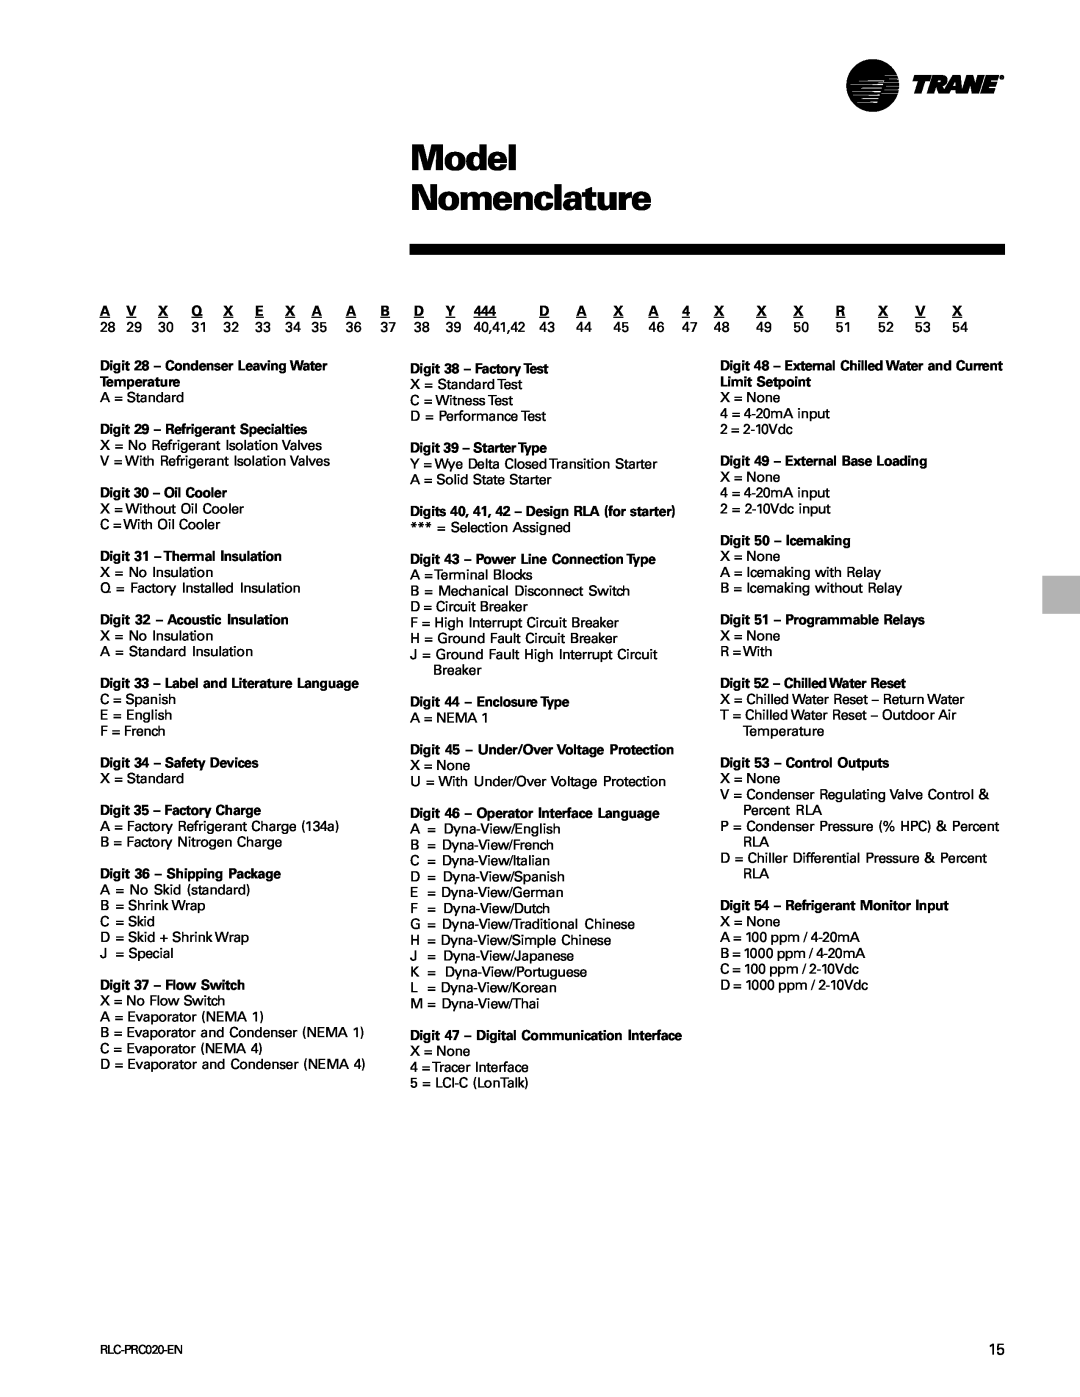 Trane RTHD manual Model Nomenclature, Digit 28 – Condenser Leaving Water Temperature 